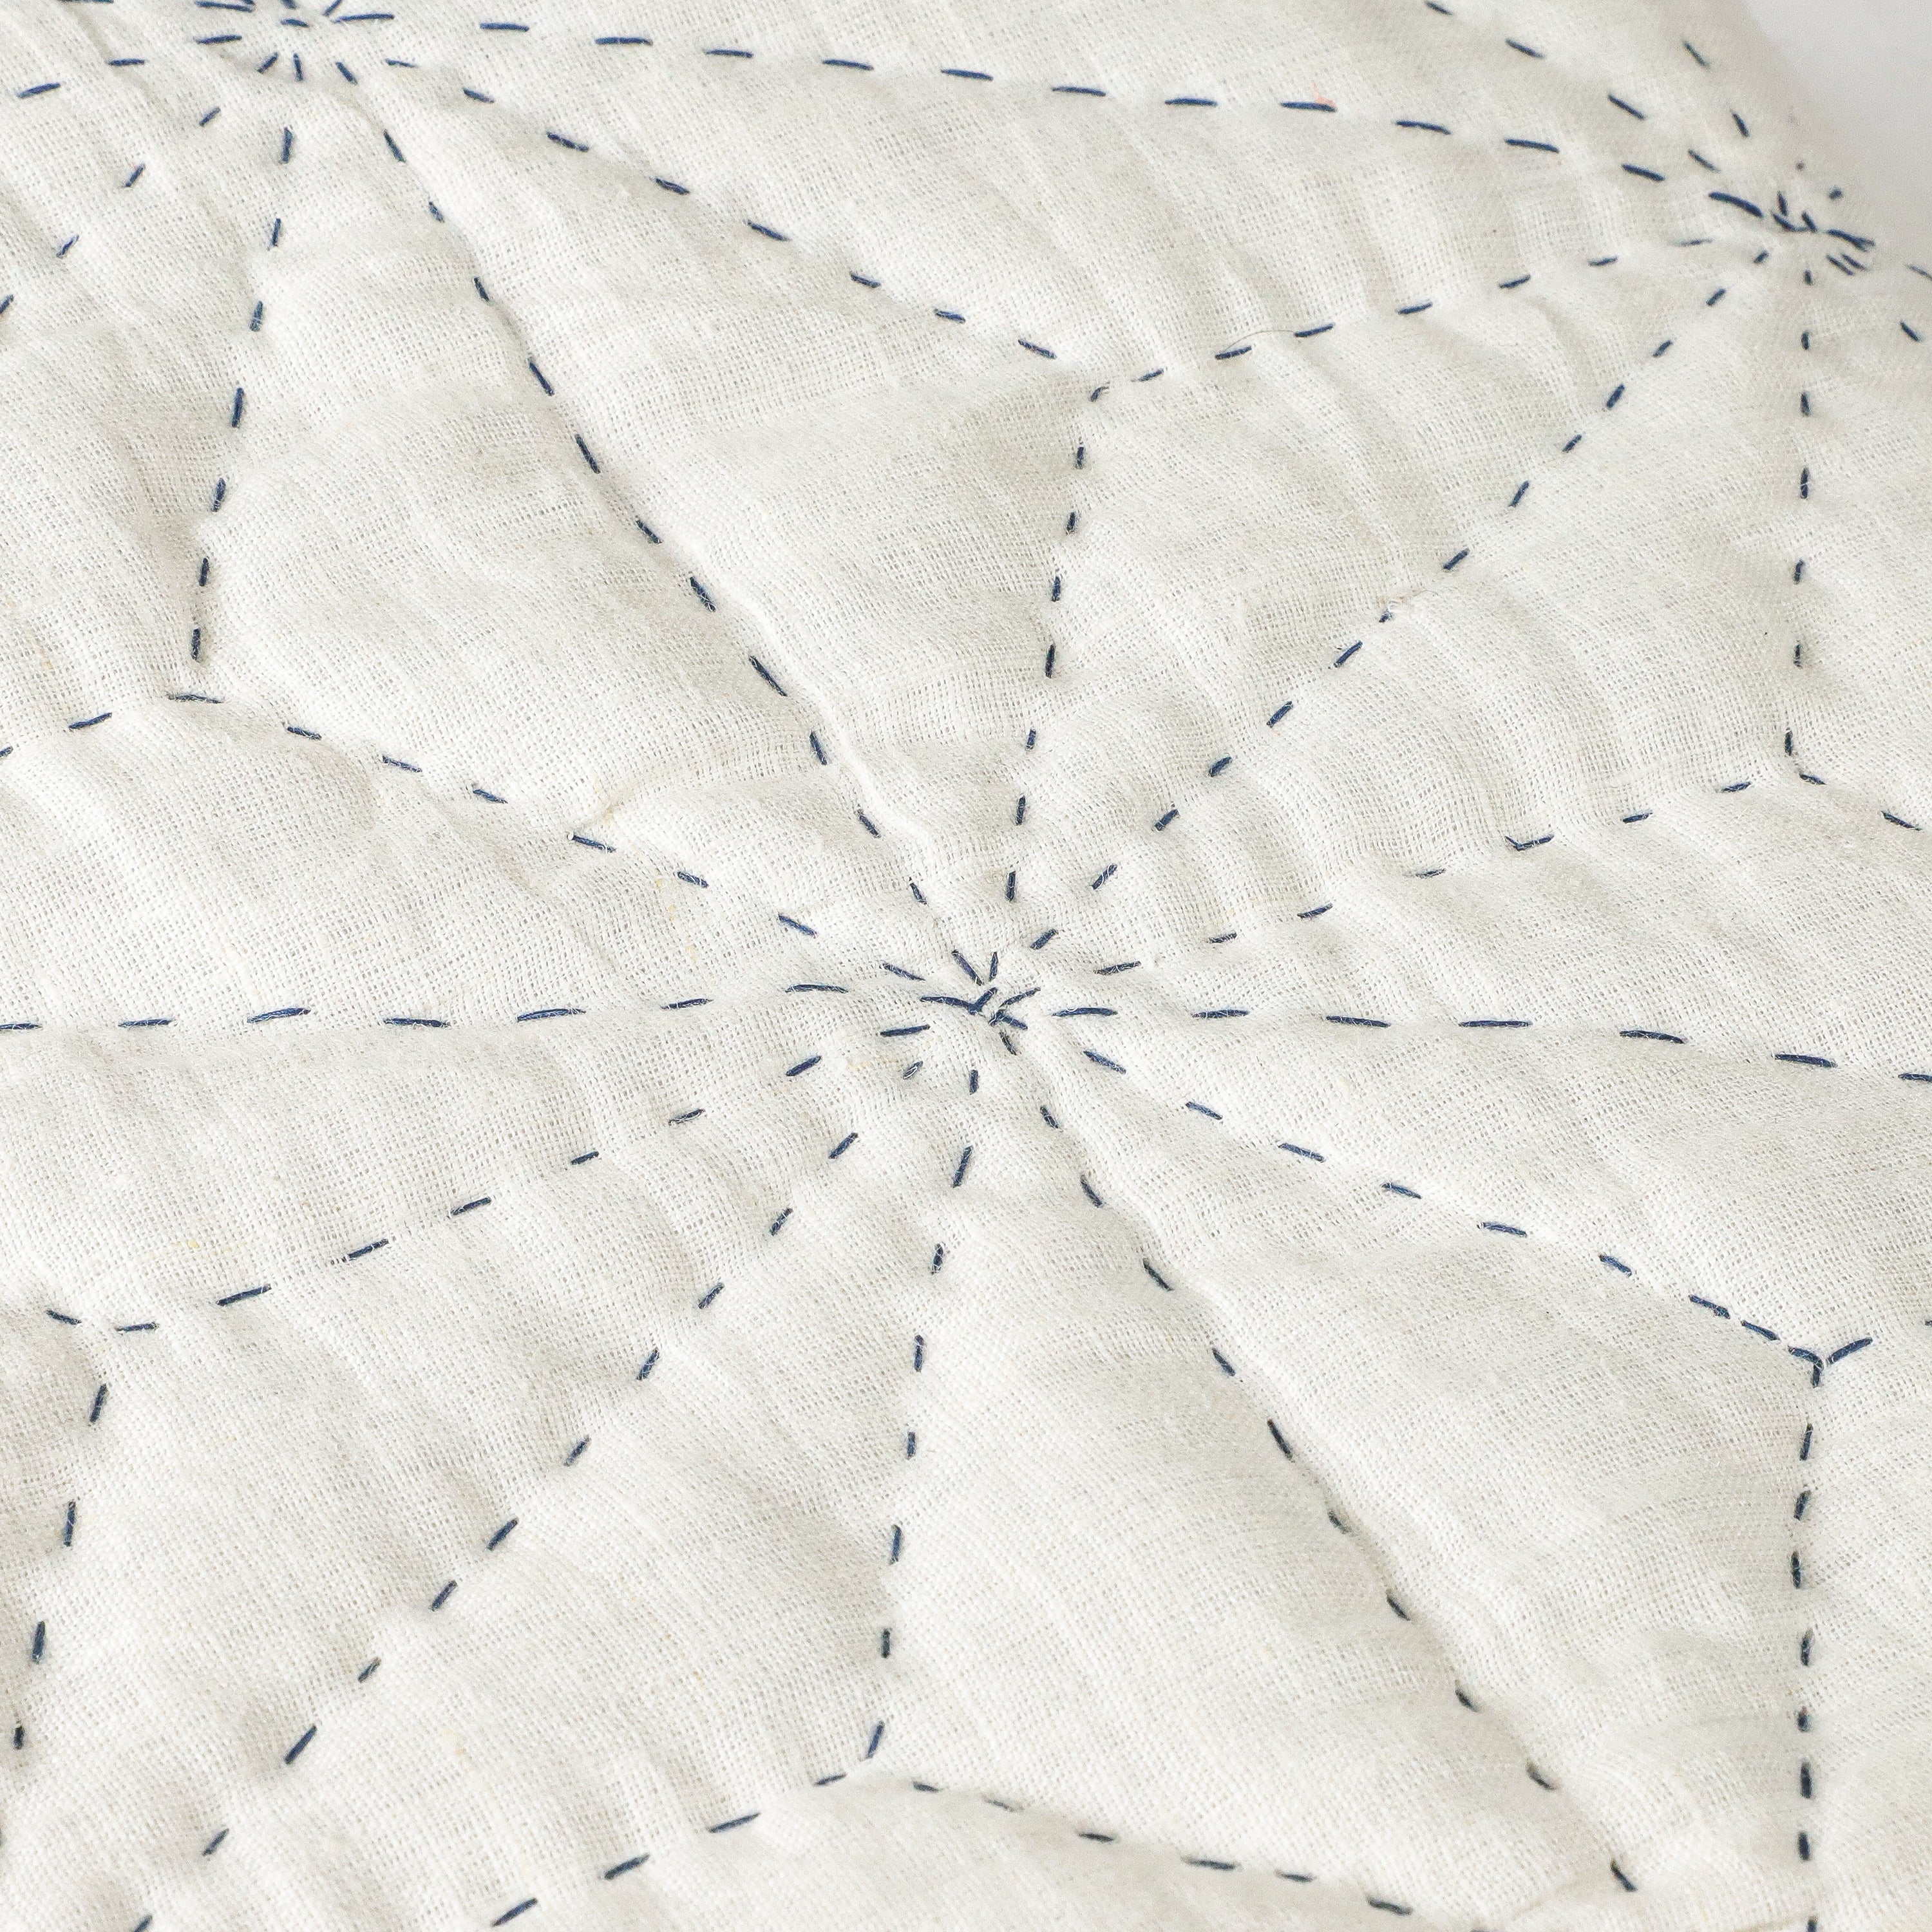 Handmade pick stitch quilt with star pattern. Handmade oatmeal linen quilt.